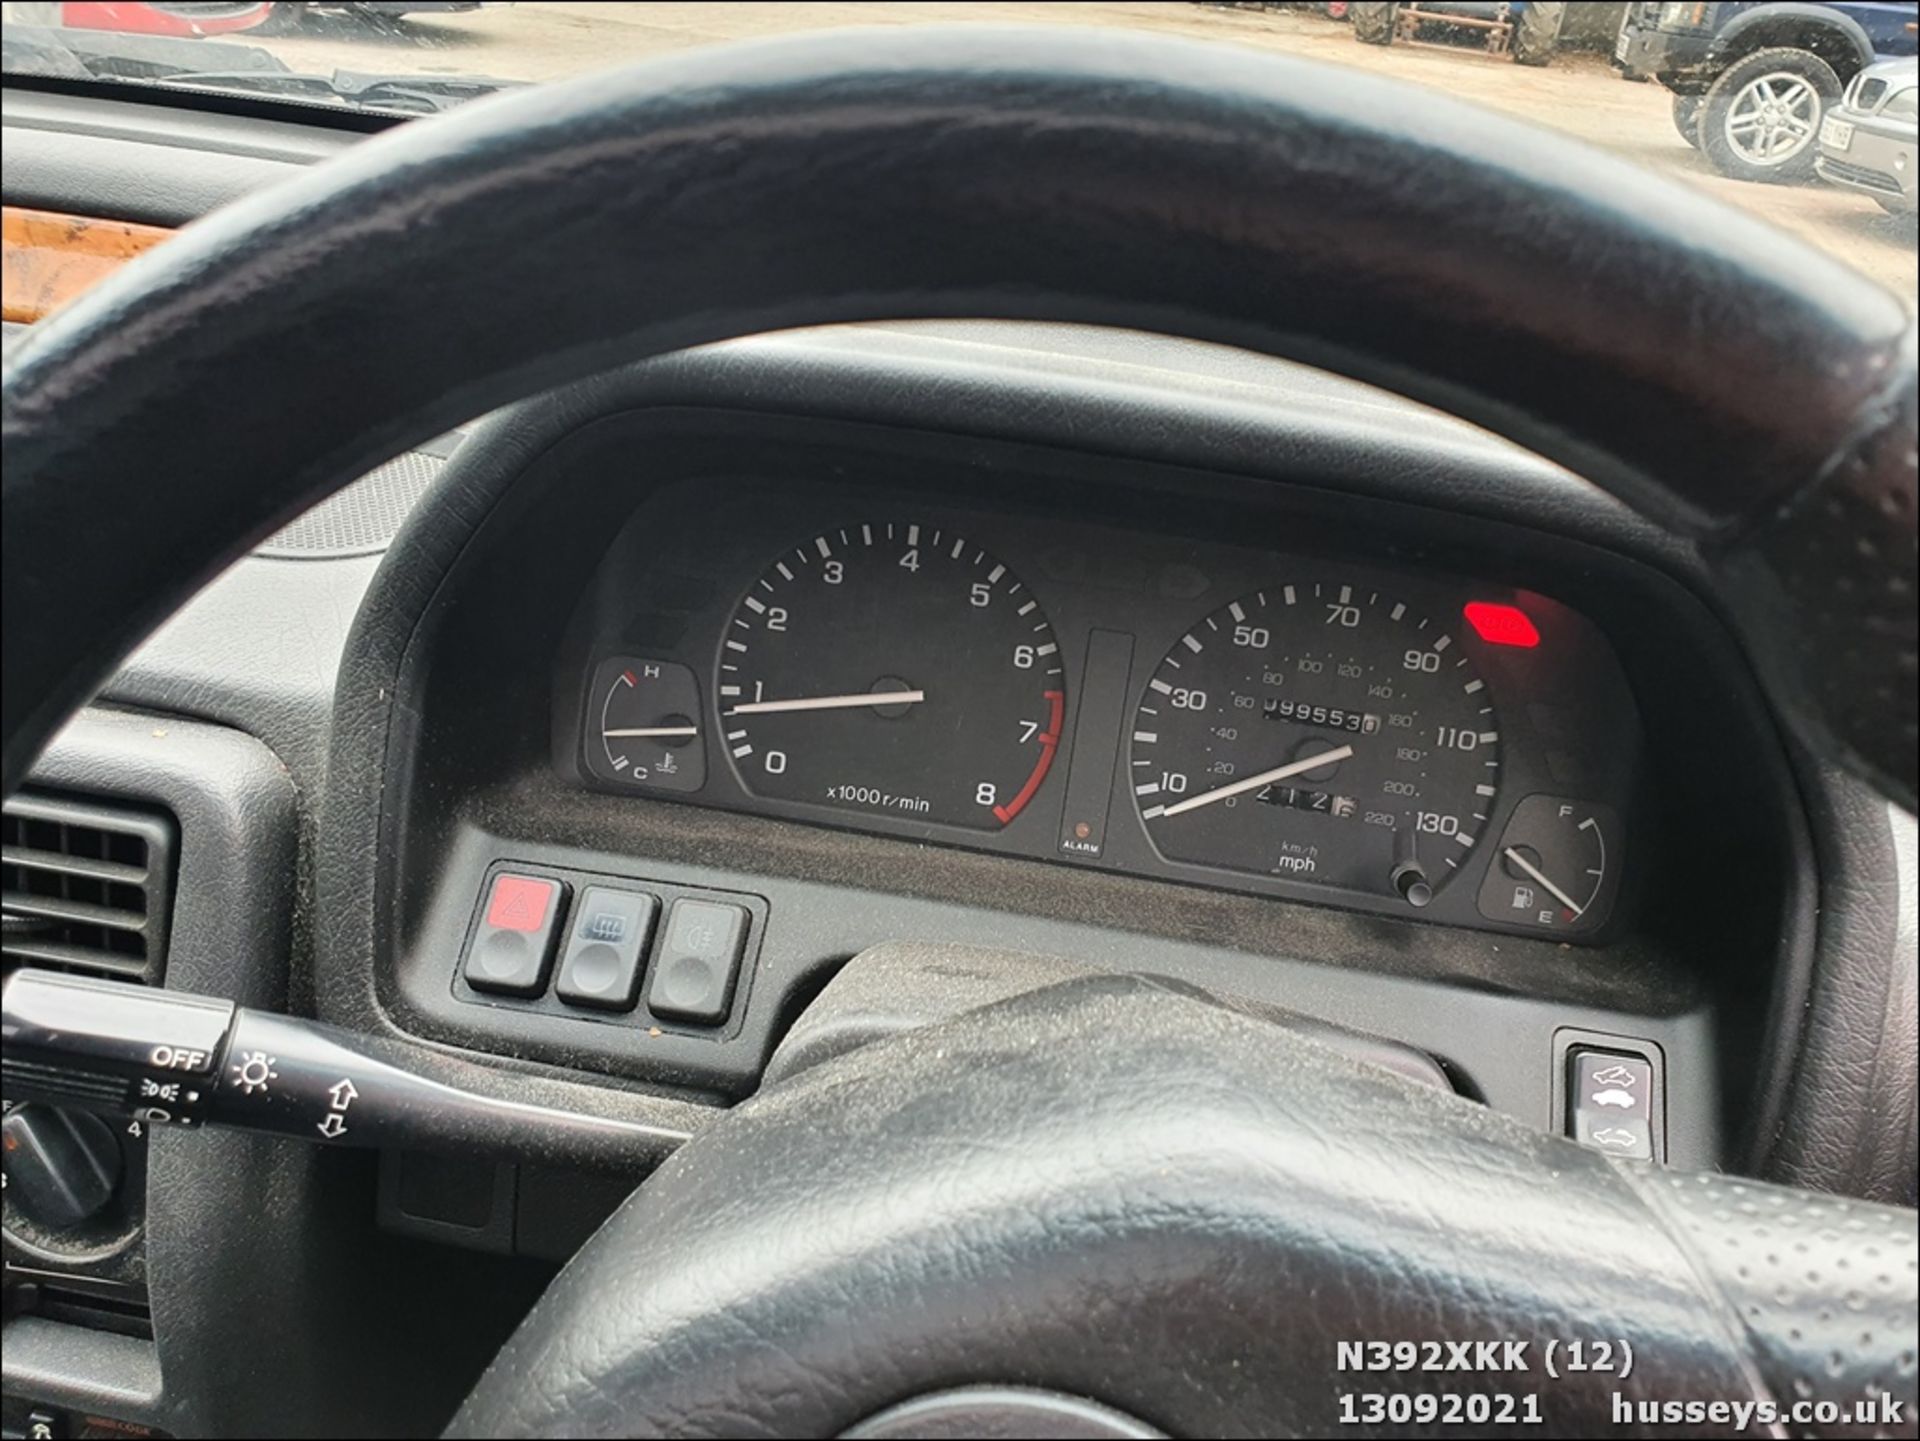 1995 ROVER 214 SEI - 1396cc 5dr Hatchback (Red, 99k) - Image 12 of 15